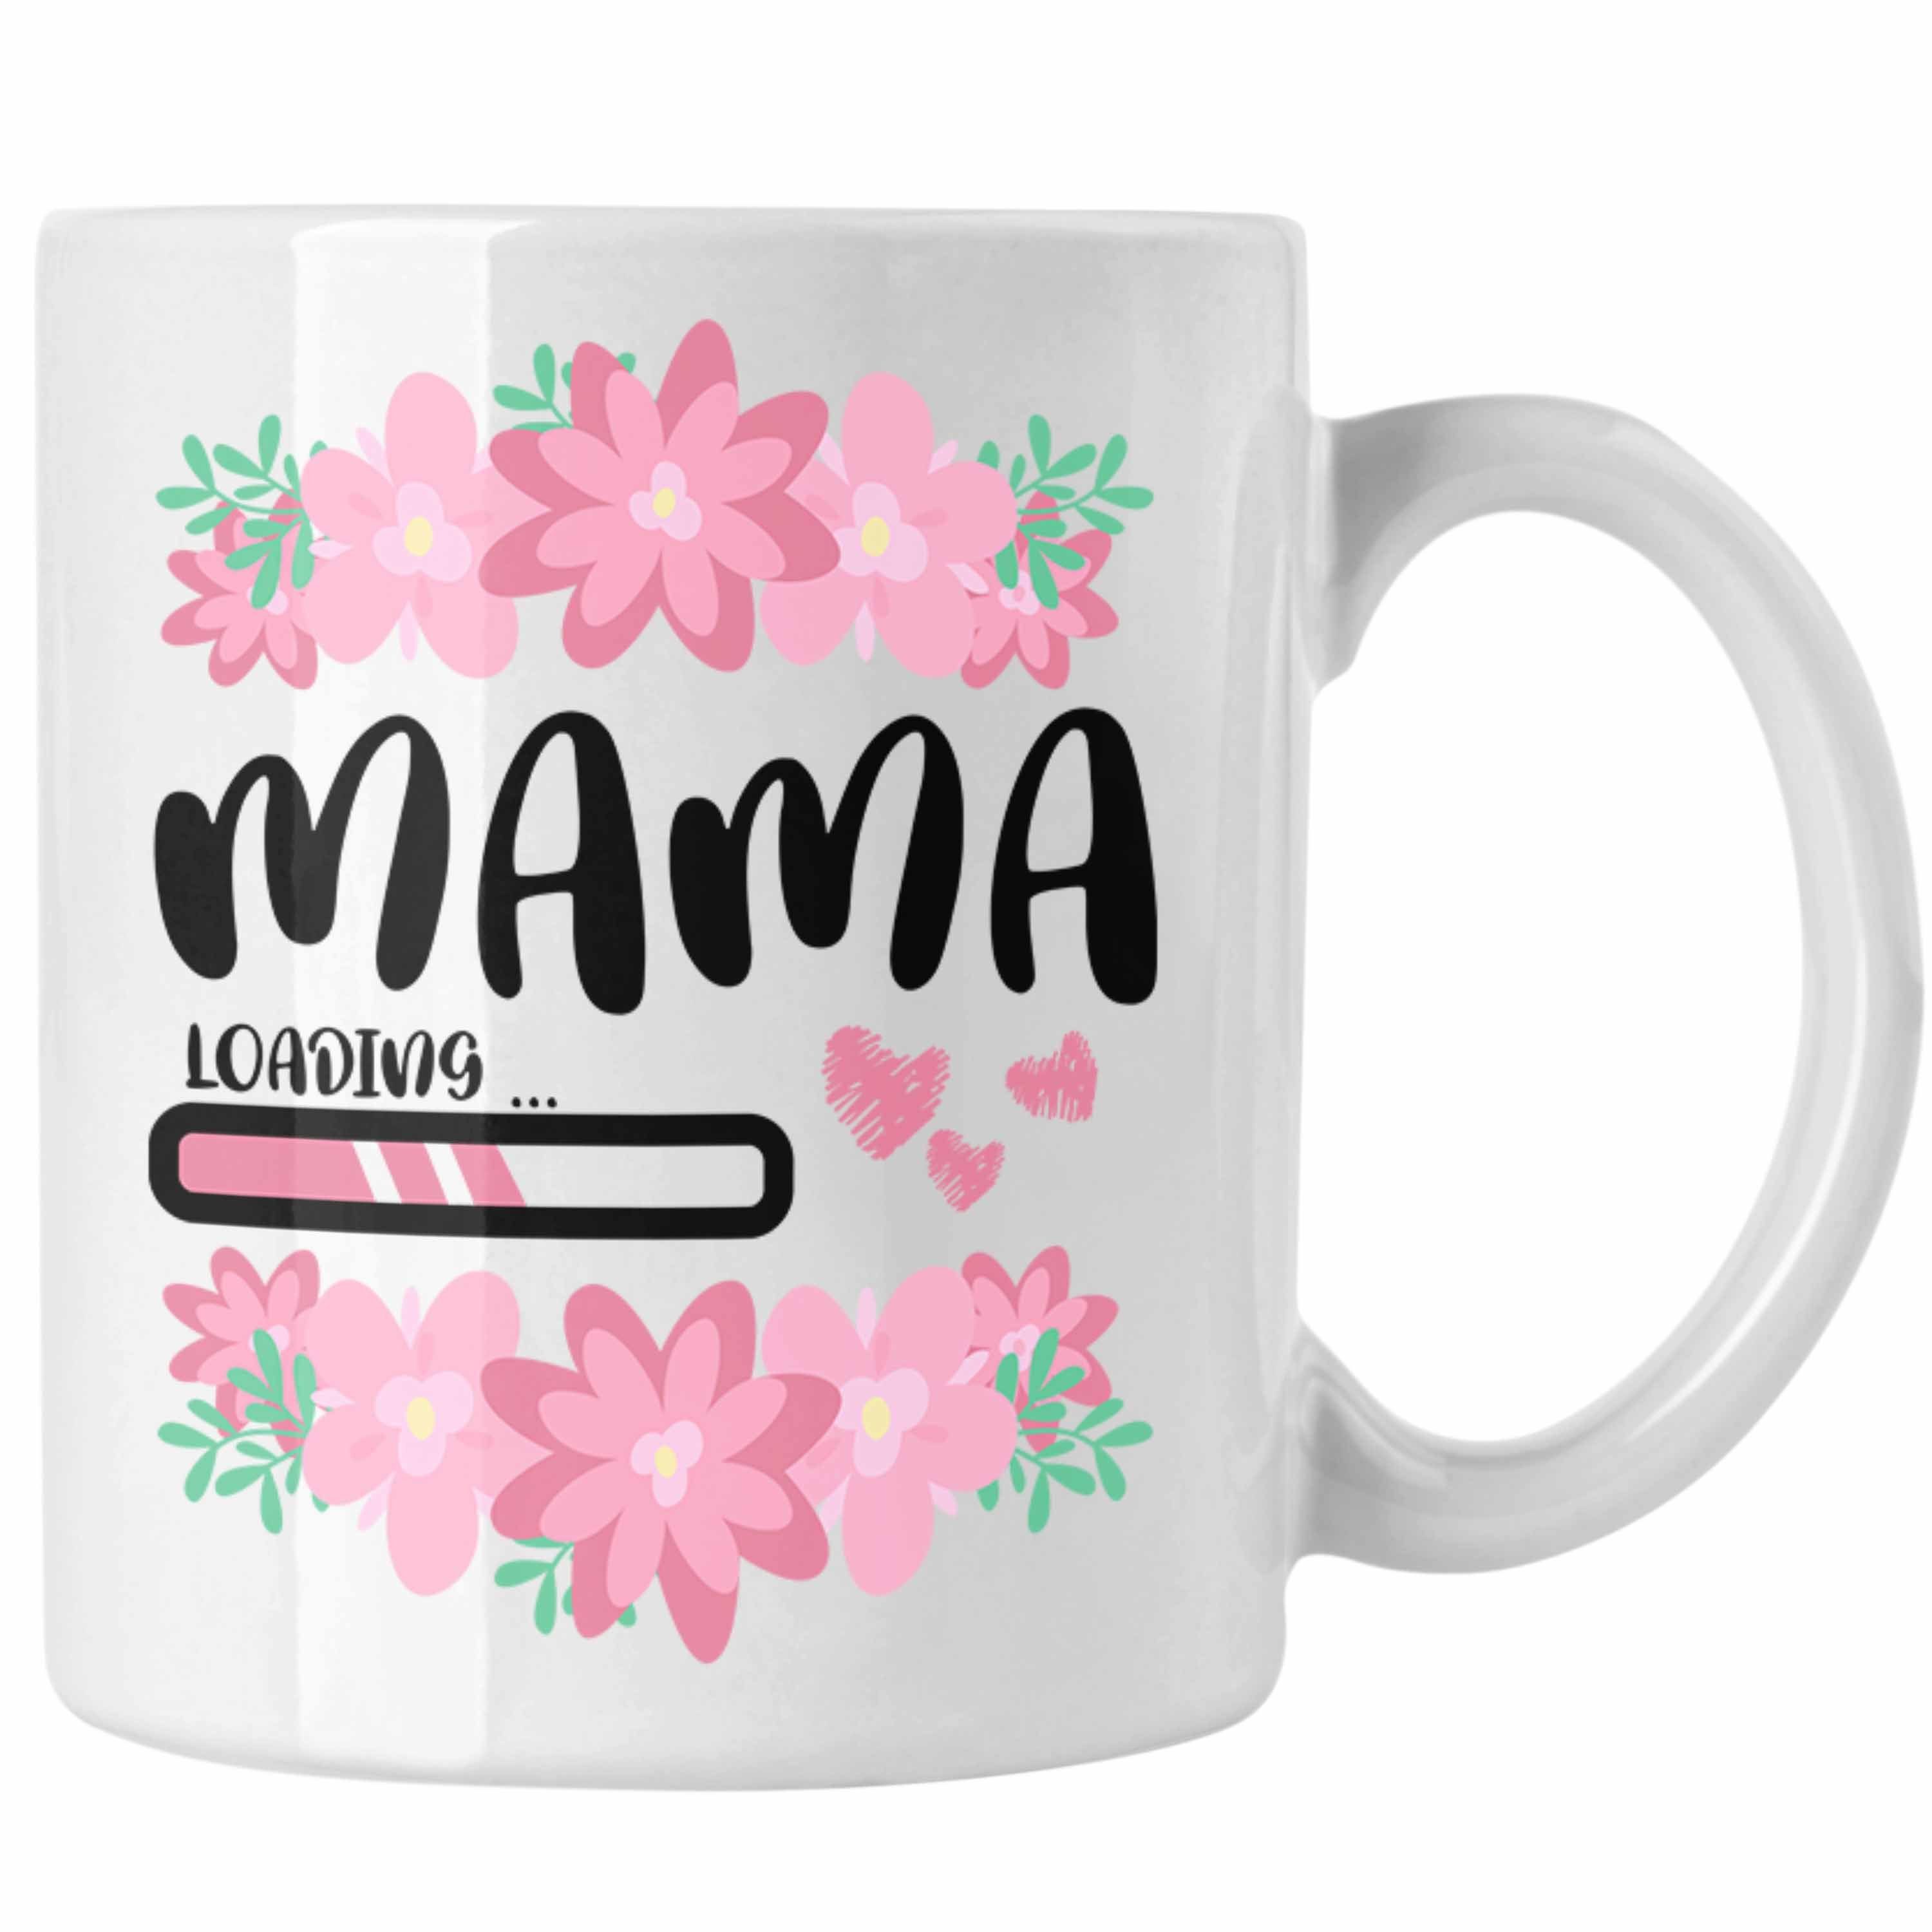 Loading - Mama Tasse Kaffeetasse Baby Schwangerschaft Weiss Rosa Trendation Tasse Schwangerschaftsankündigung Geschenk Trendation